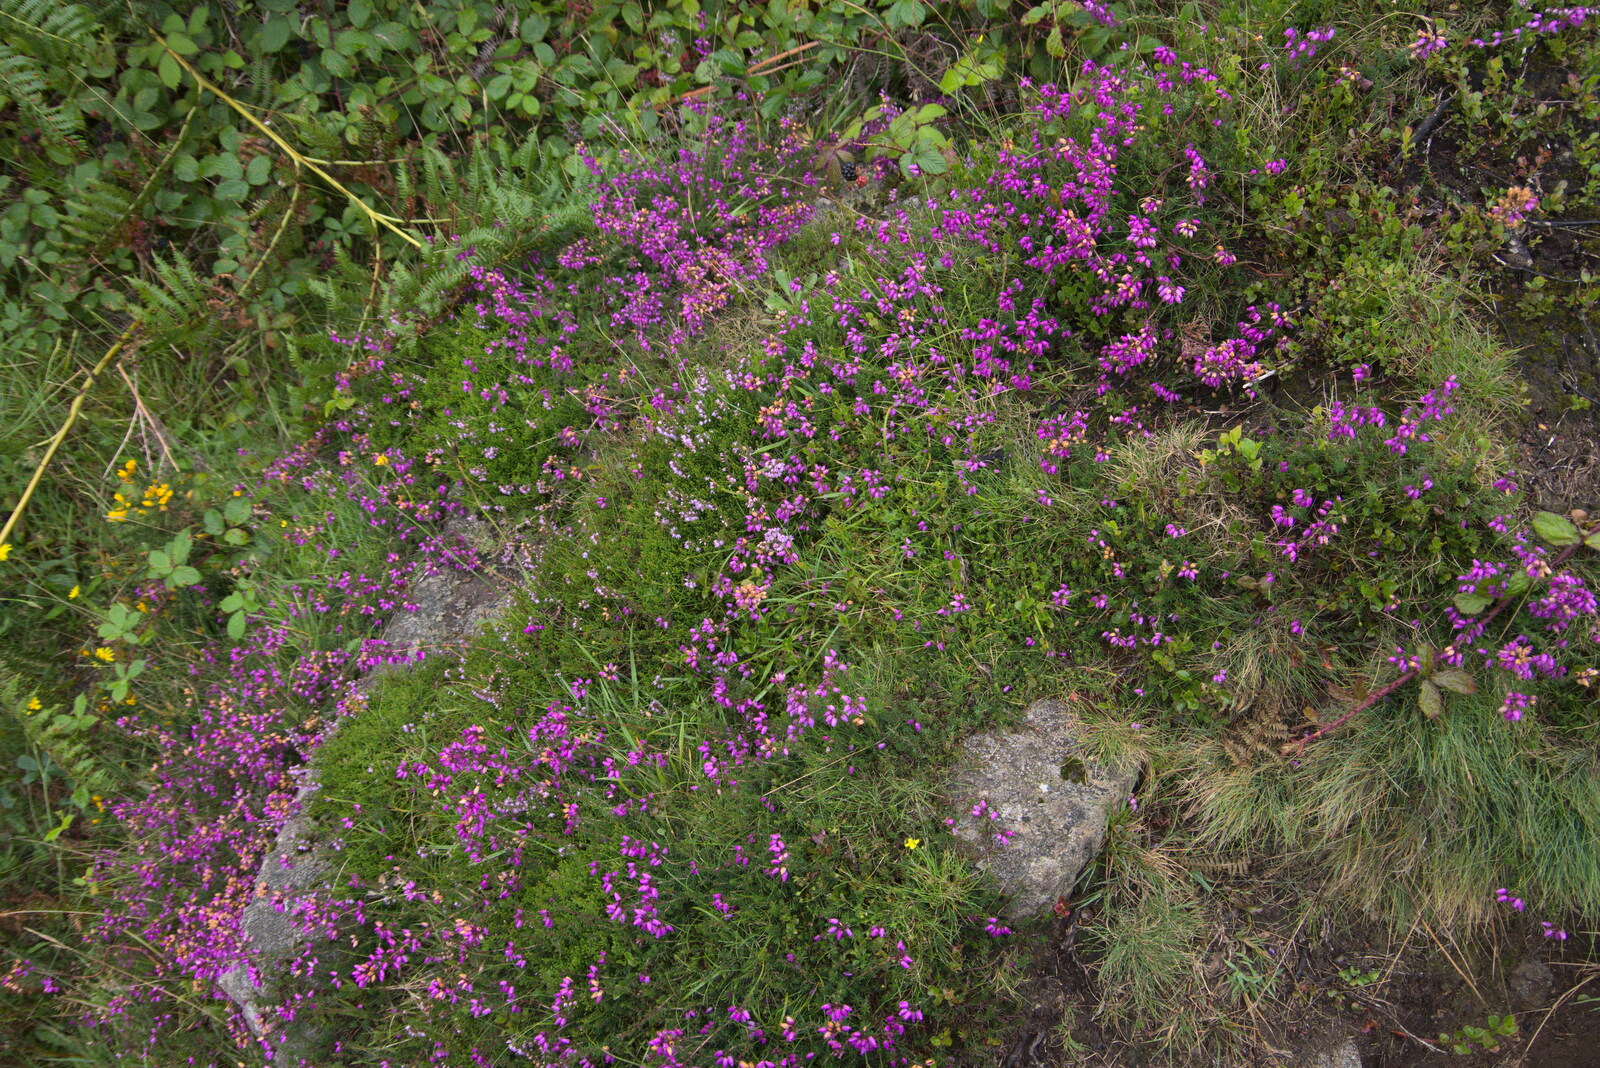 More purple flowers from A Walk up Hound Tor, Dartmoor, Devon - 24th August 2020